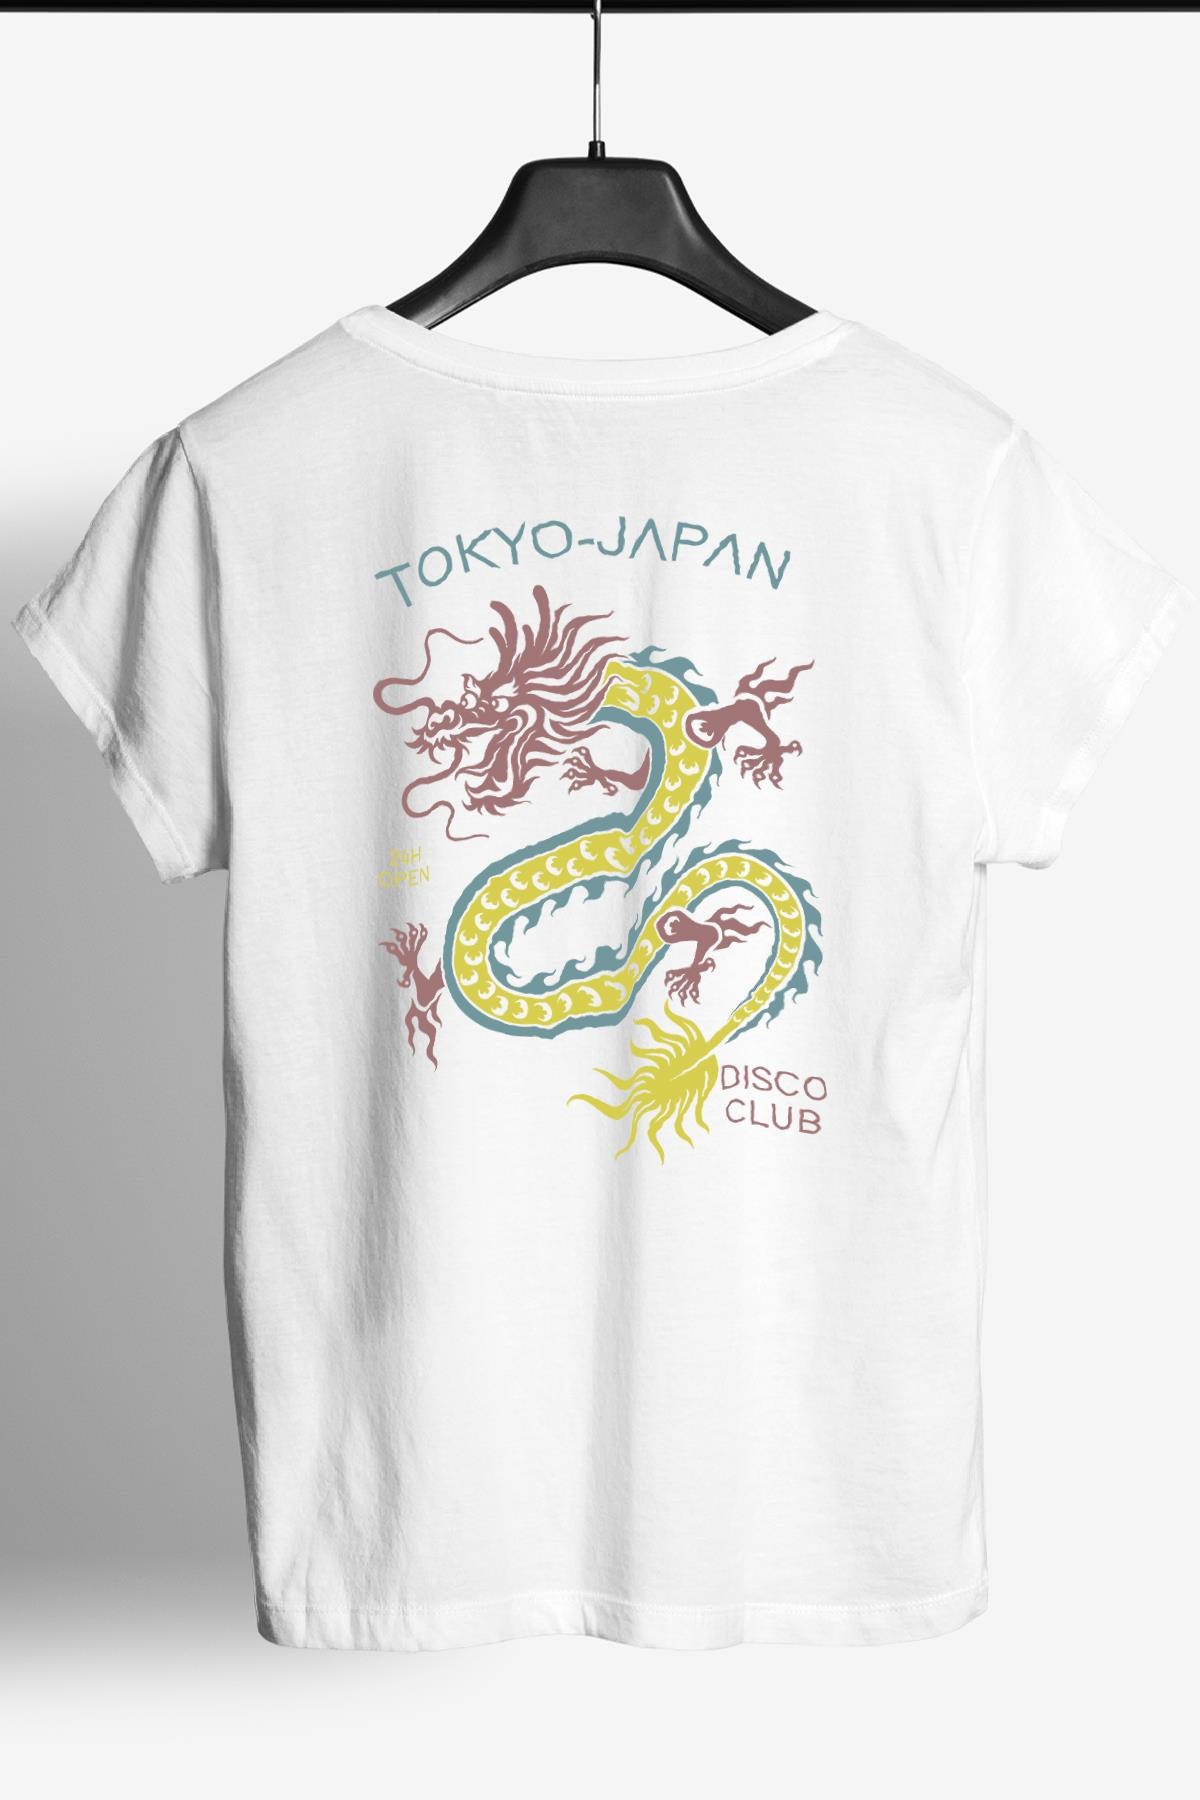 Behind Tokyo Printed Crew Neck Men's T -shirt